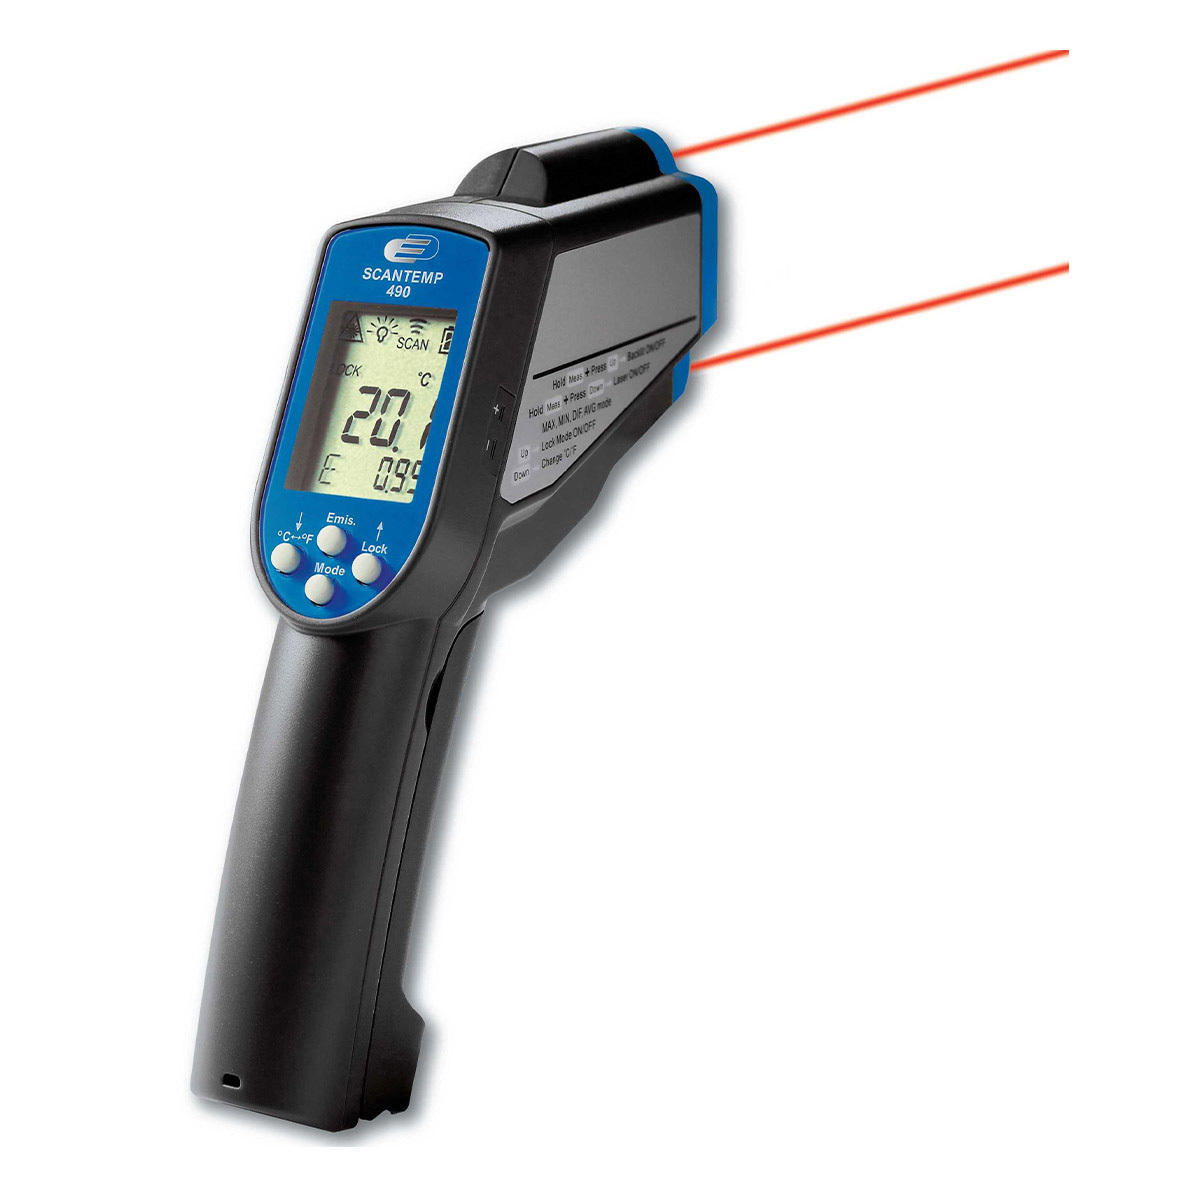 31-1123-k-infrarot-thermometer-scantemp-490-1200x1200px.jpg